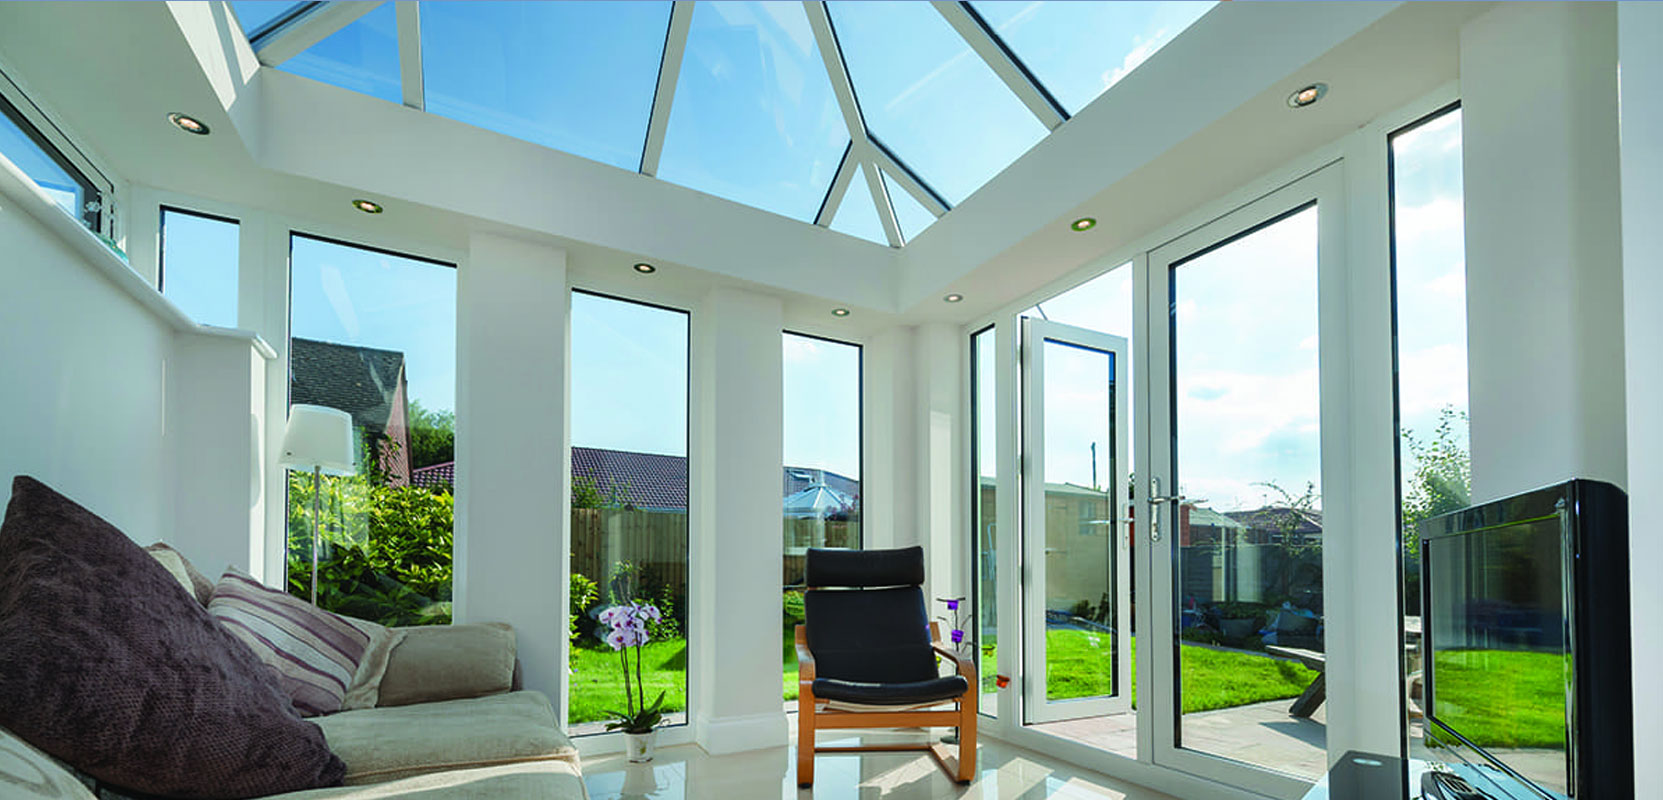 Photo of energy saving windows in conservatory